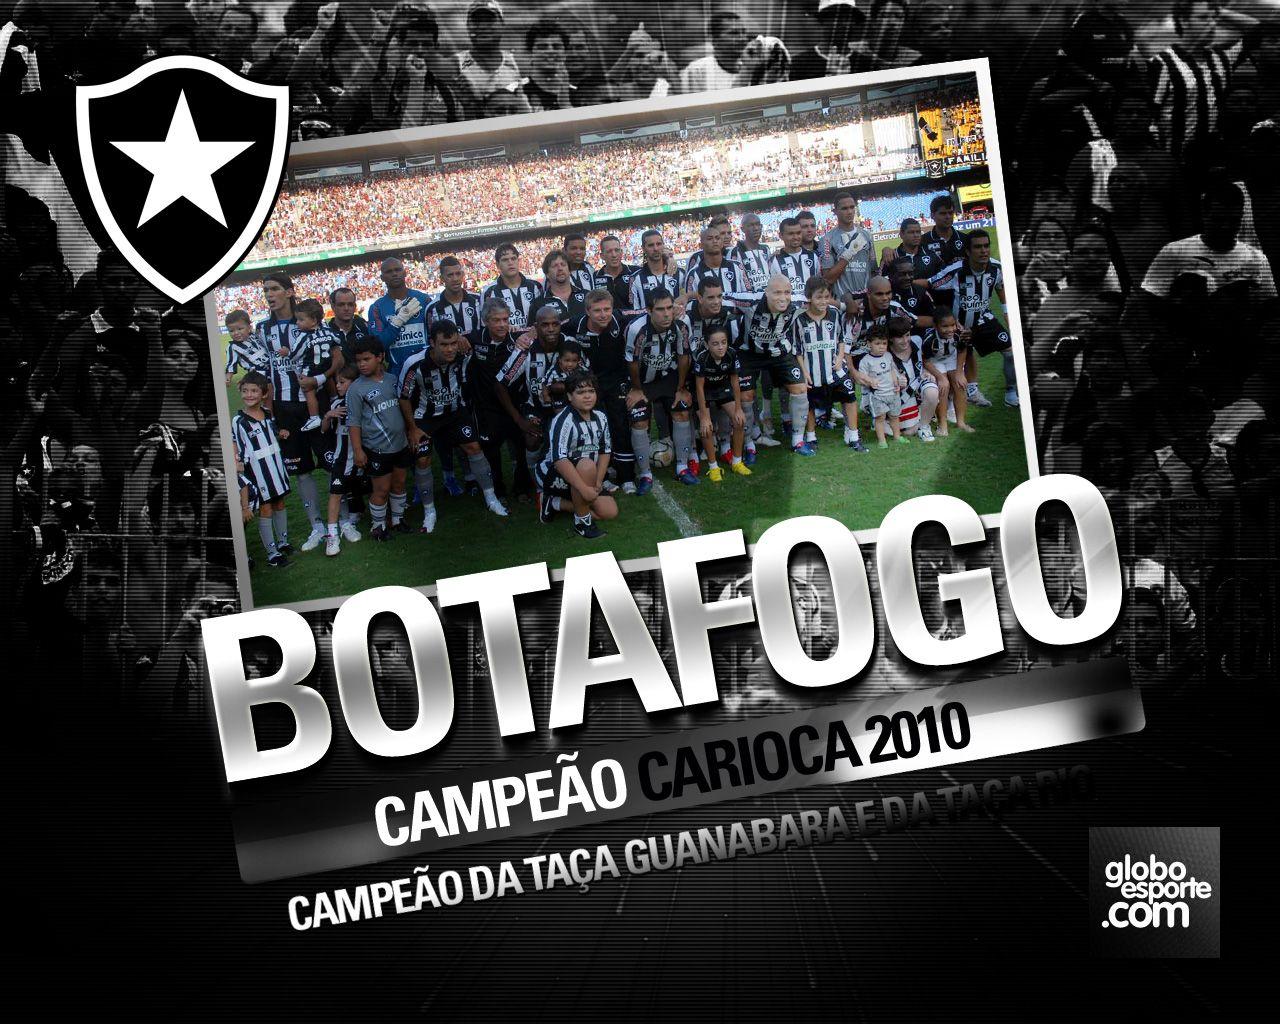 all new pix1: Wallpaper Botafogo Rj